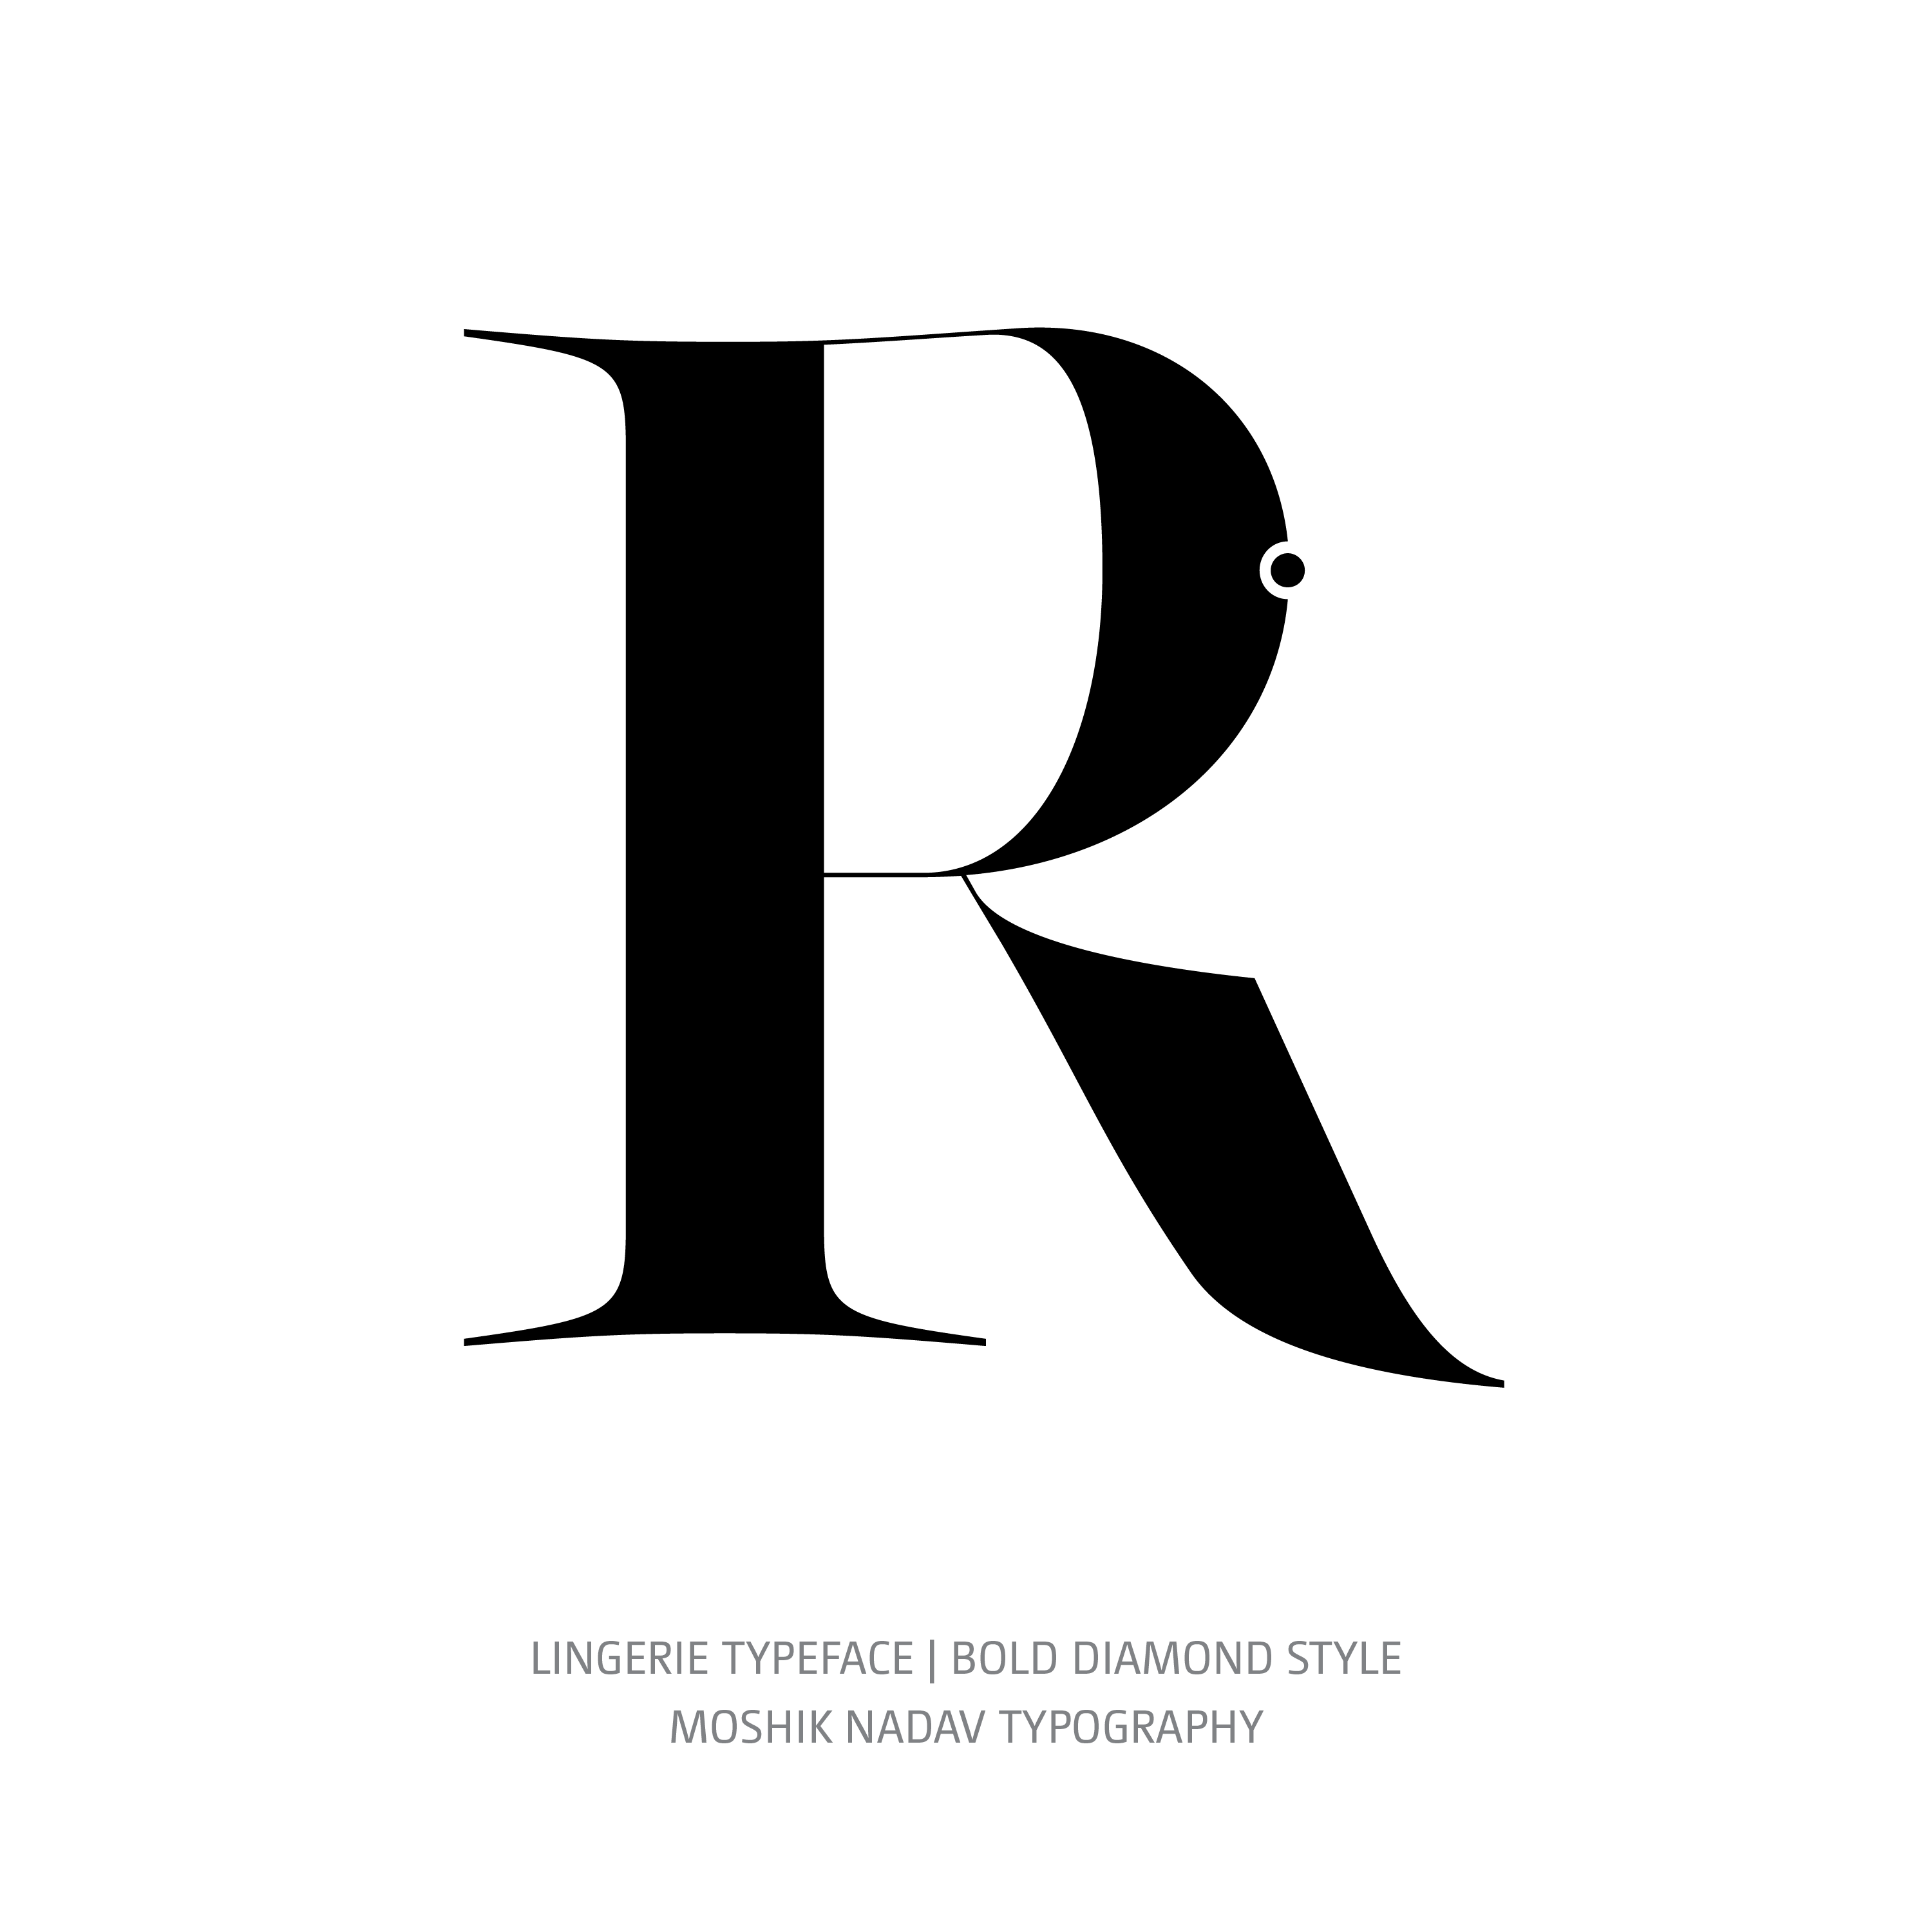 Lingerie Typeface Bold Diamond R